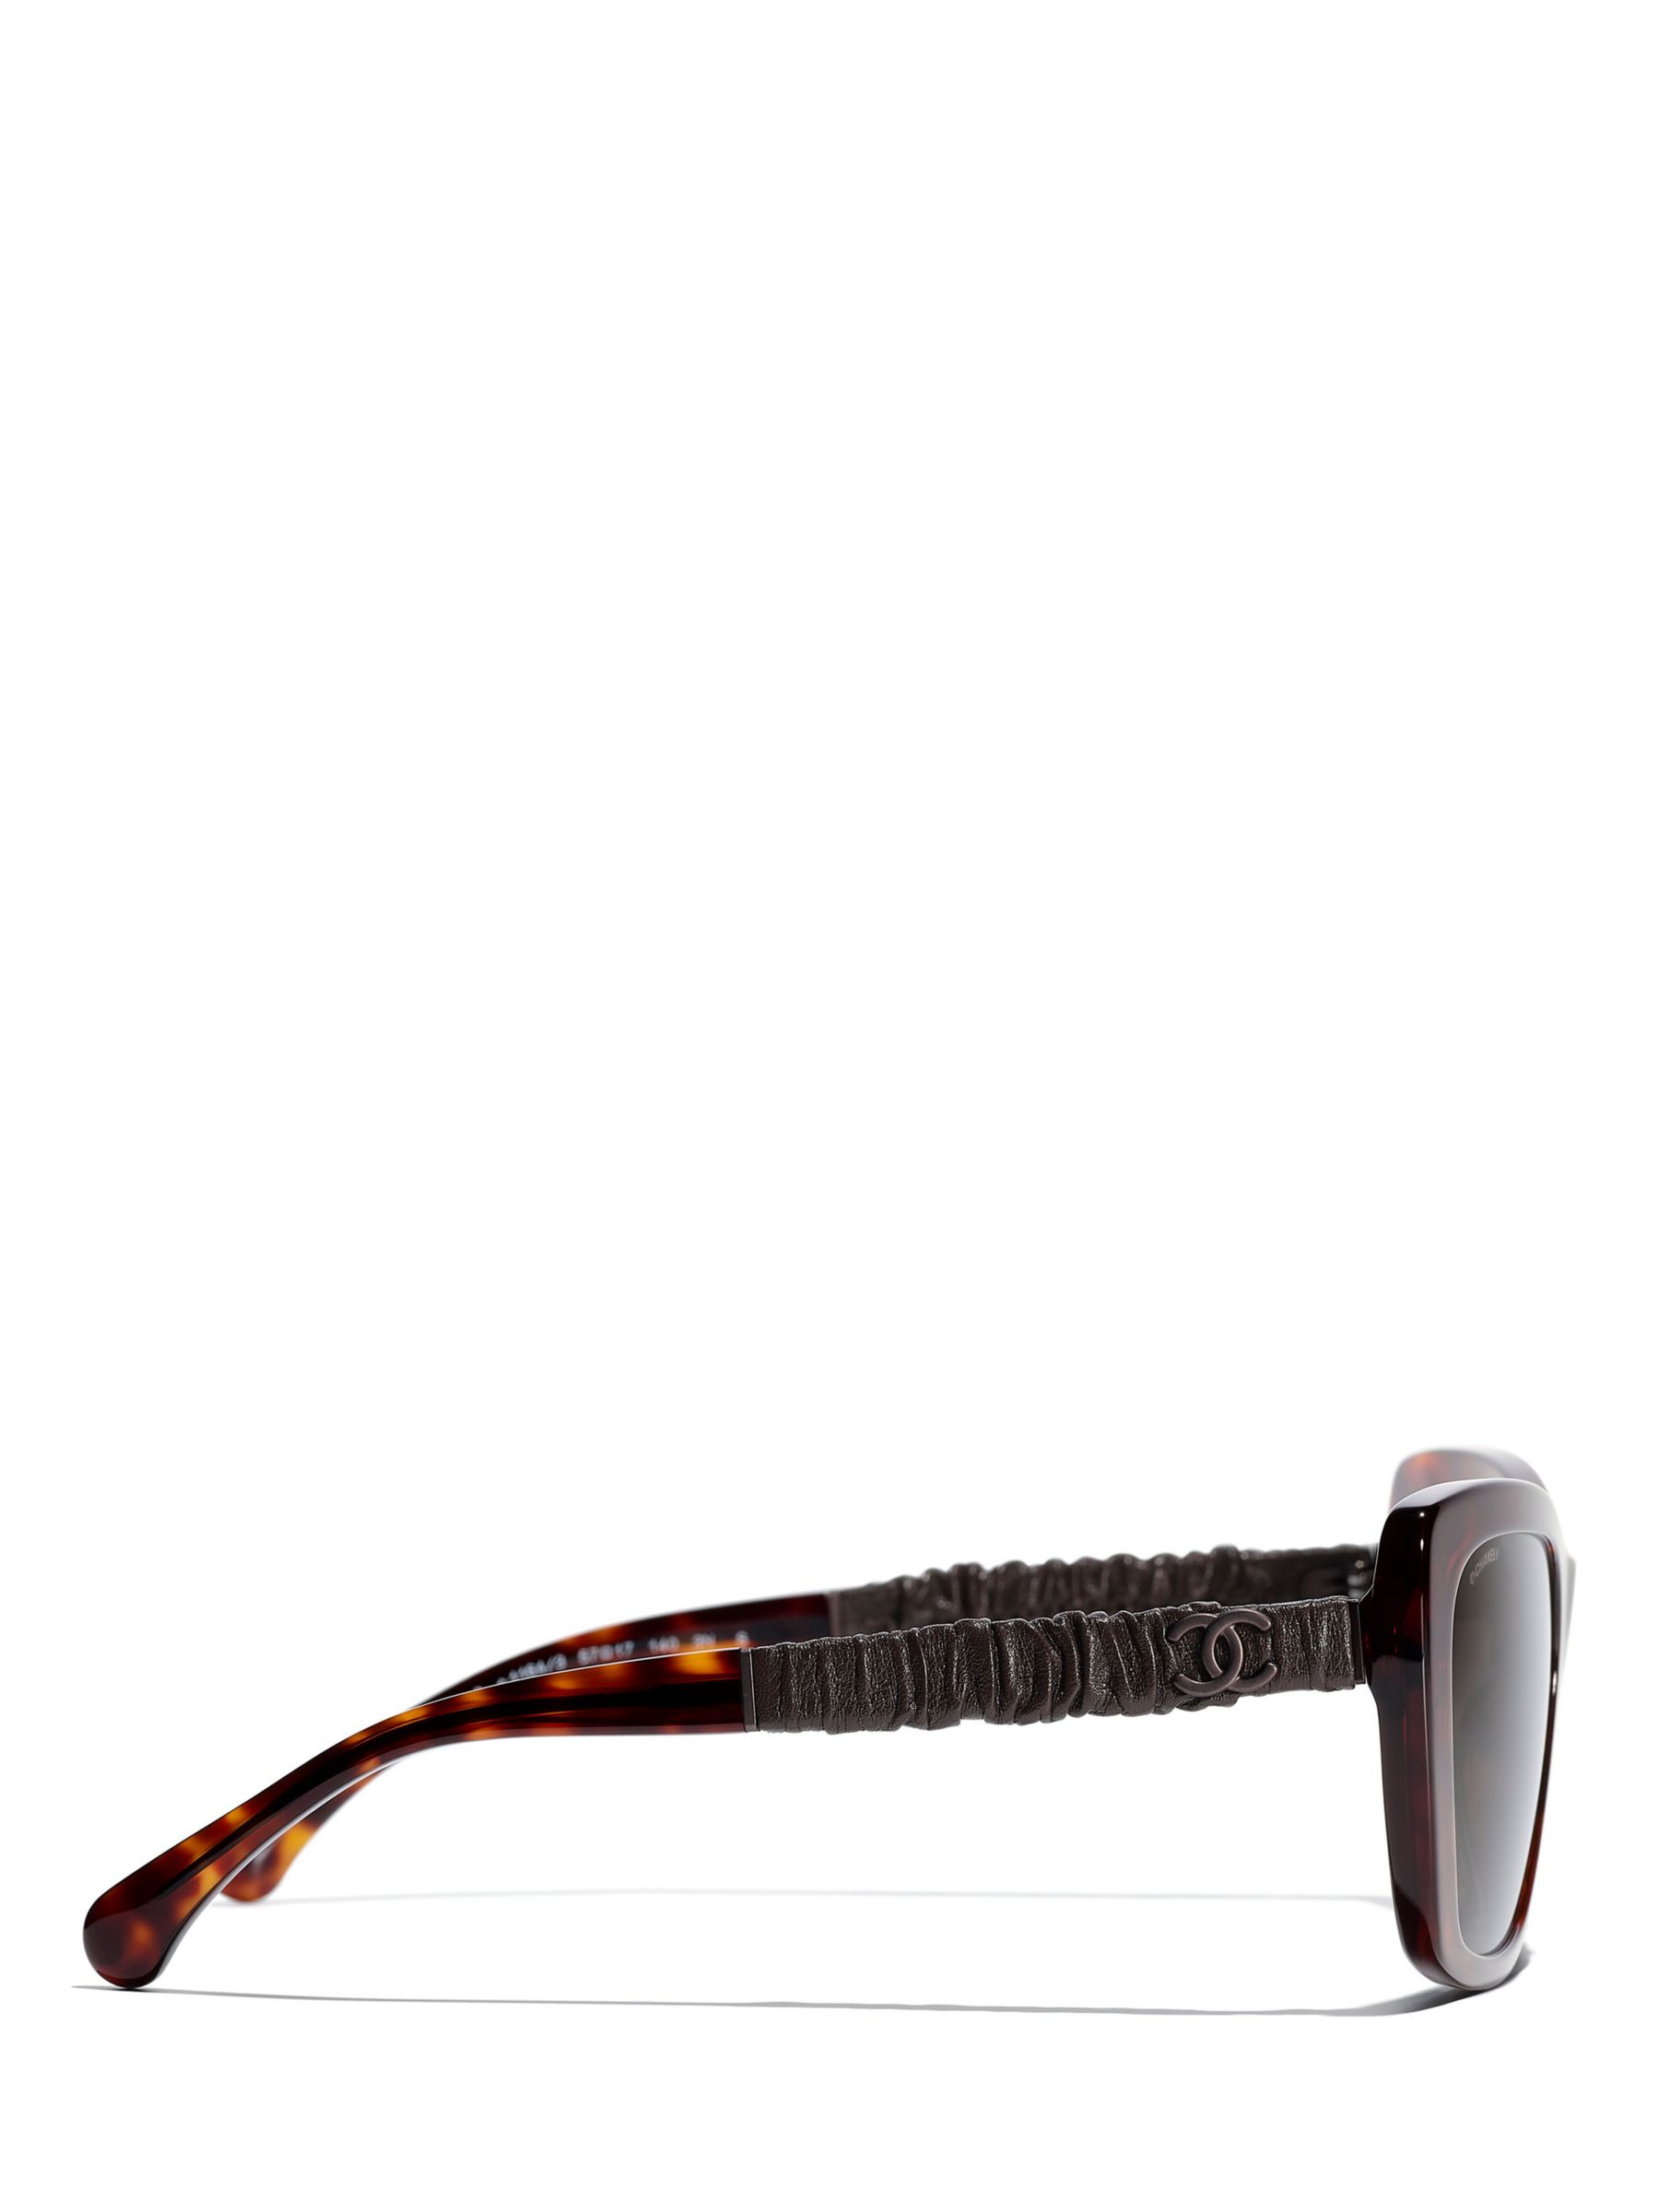 Buy CHANEL Irregular Sunglasses CH5476Q Havana/Brown Online at johnlewis.com